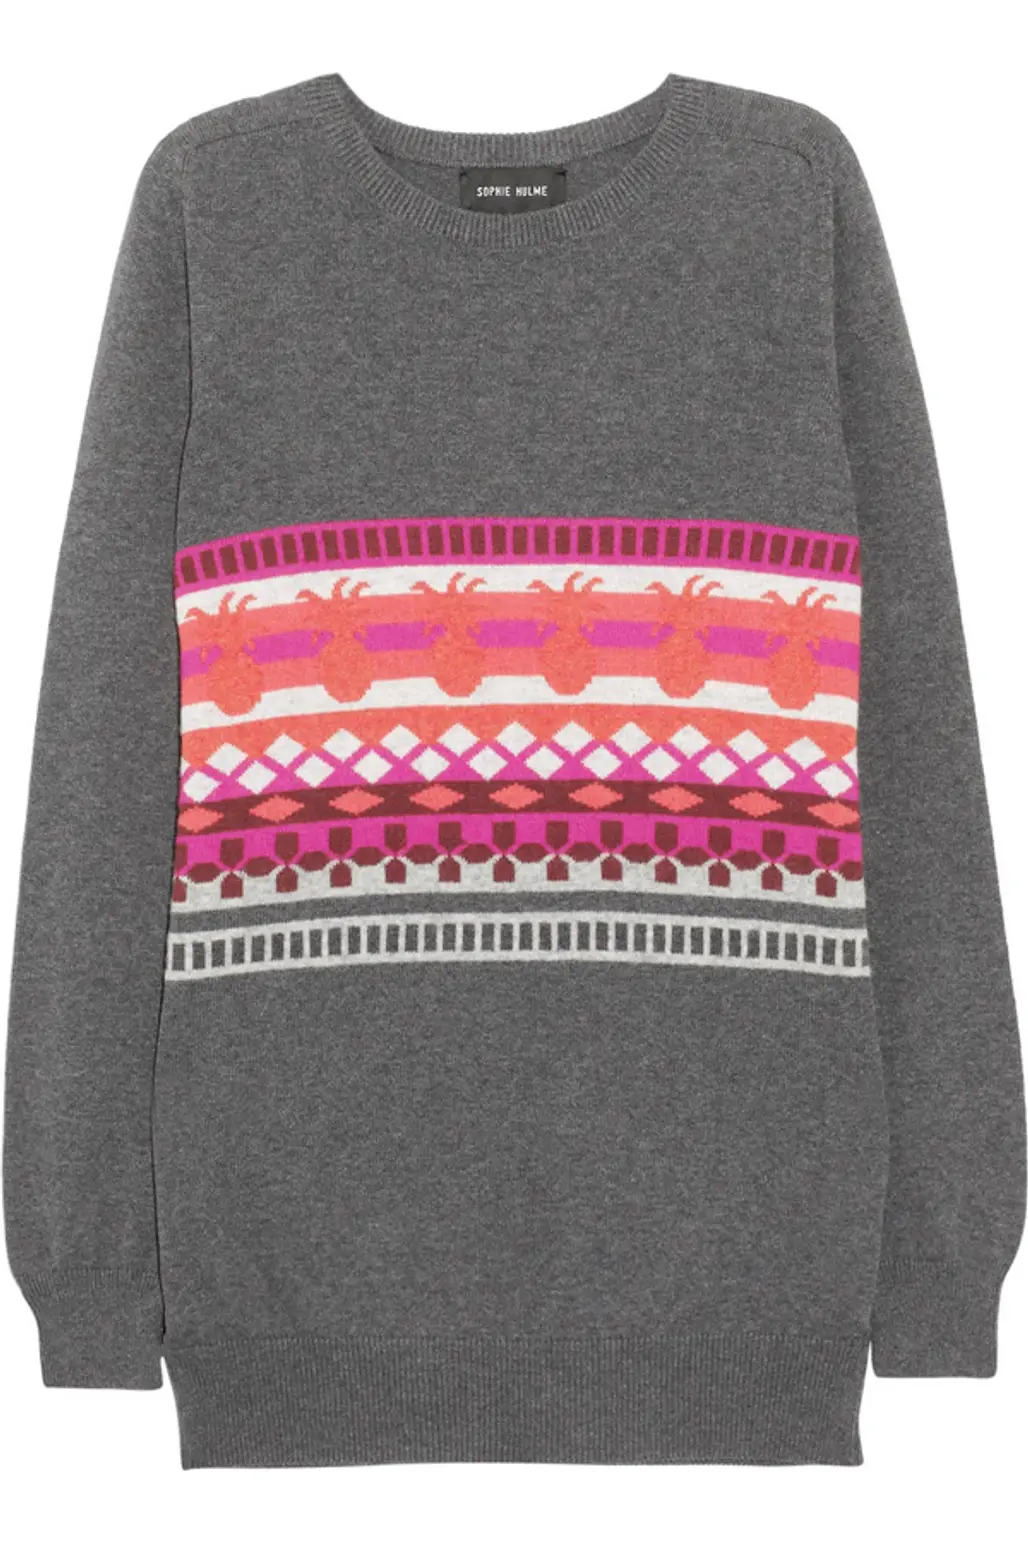 Pineapple Print Sweater